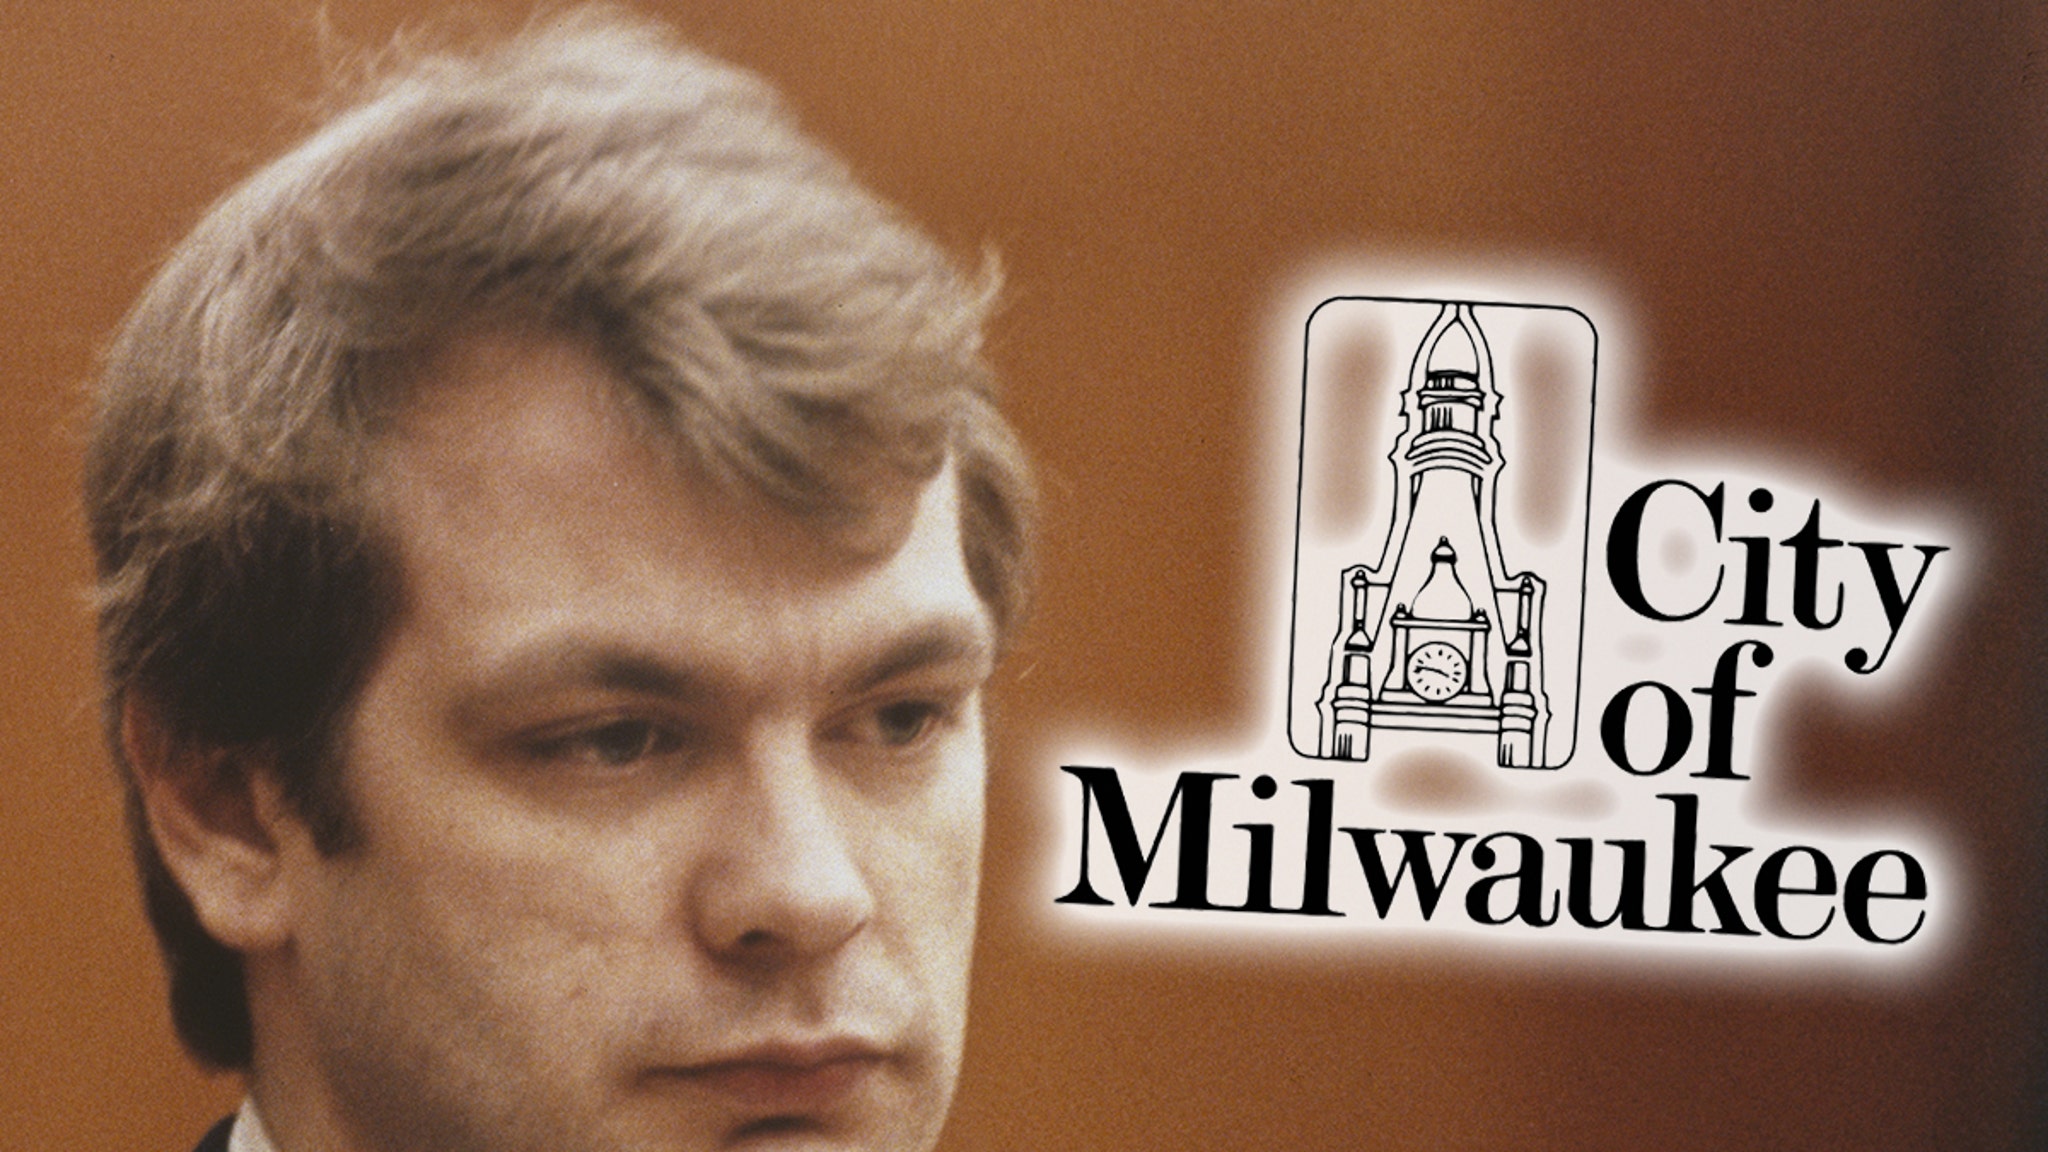 Memorial plan for Jeffrey Dahmer victims worries Milwaukee officials